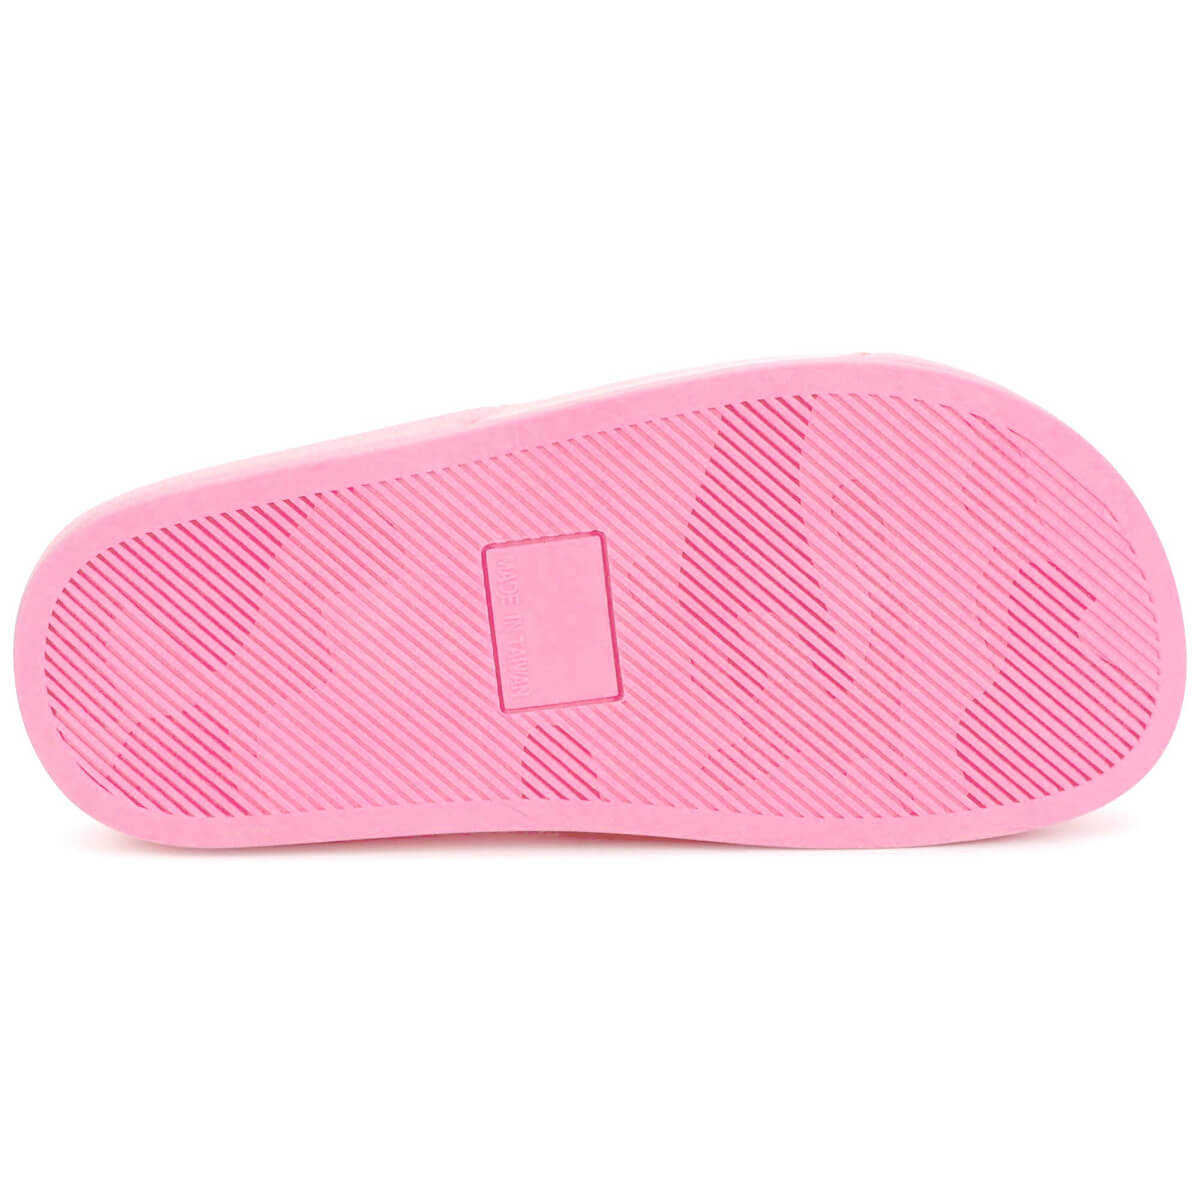 Billieblush Girls Pink Aqua Slides